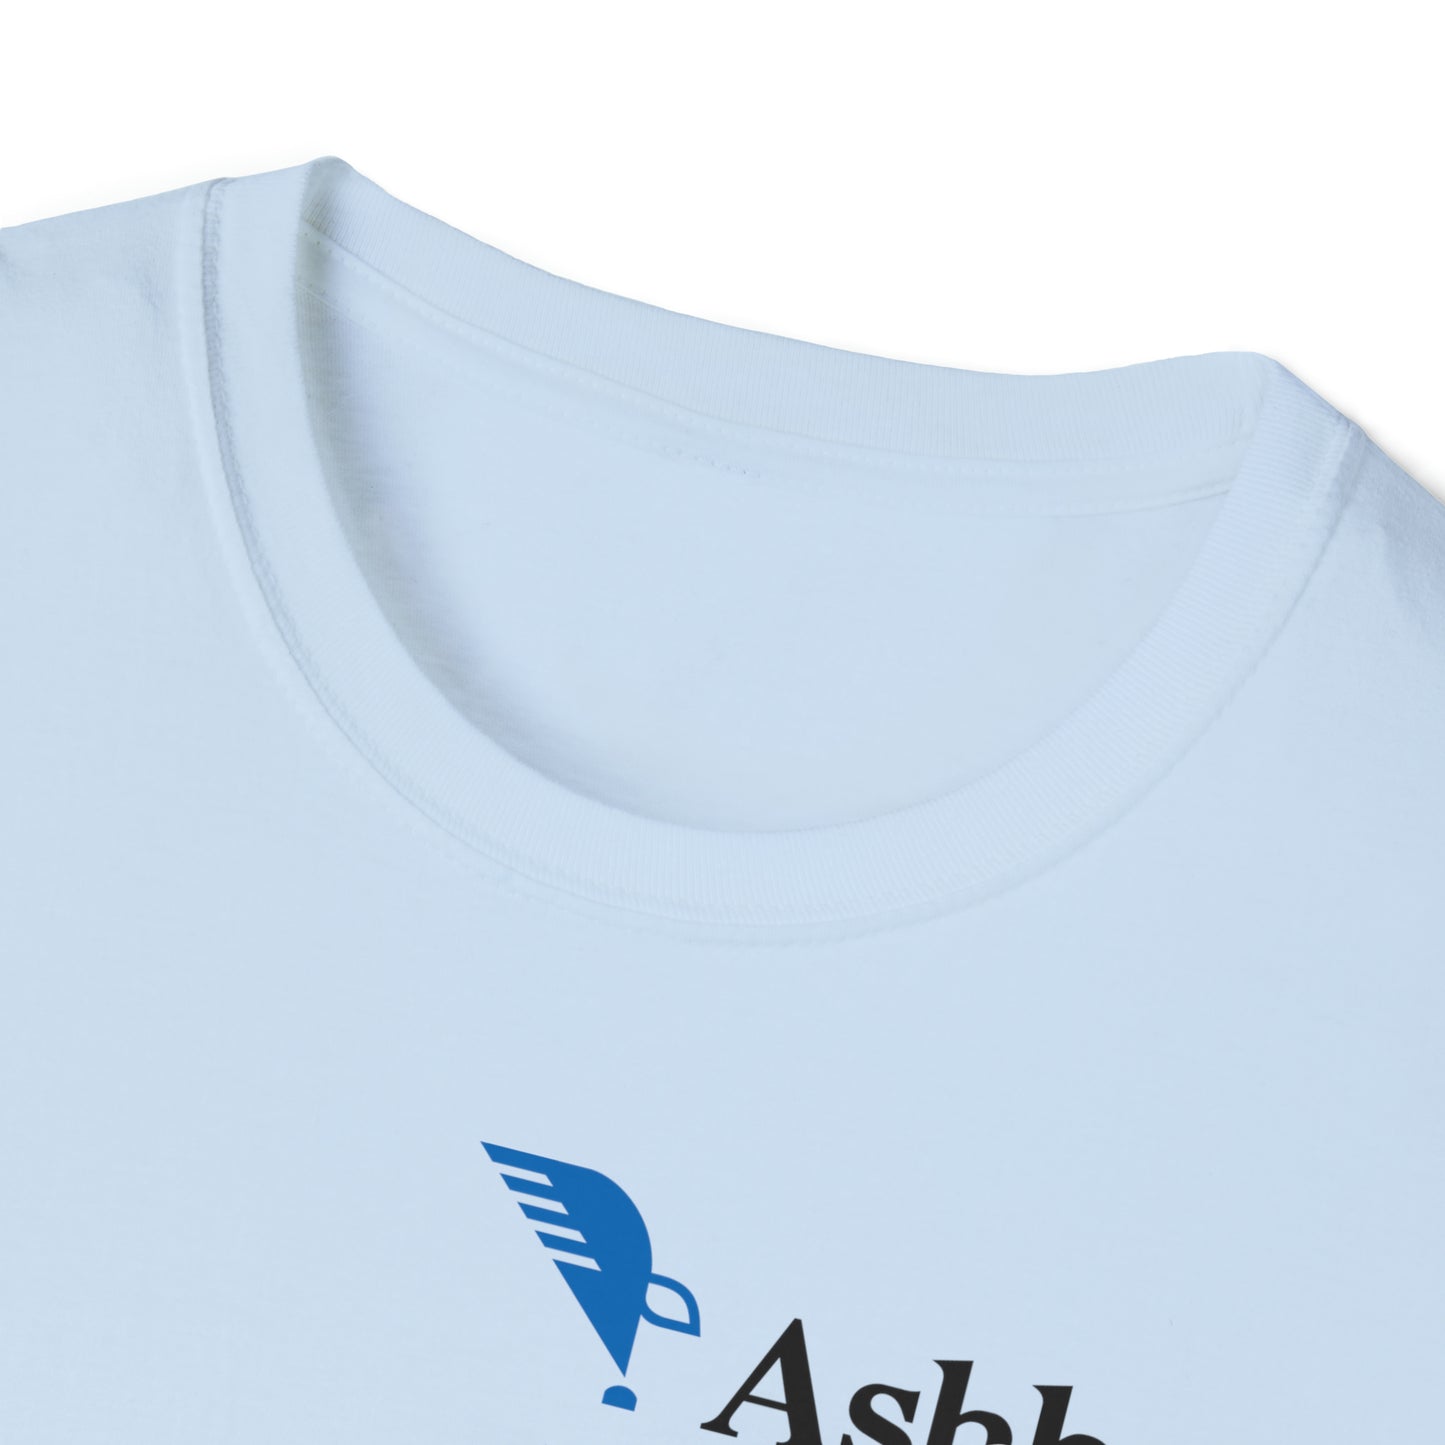 Ashbrook Scholar Unisex Softstyle T-Shirt